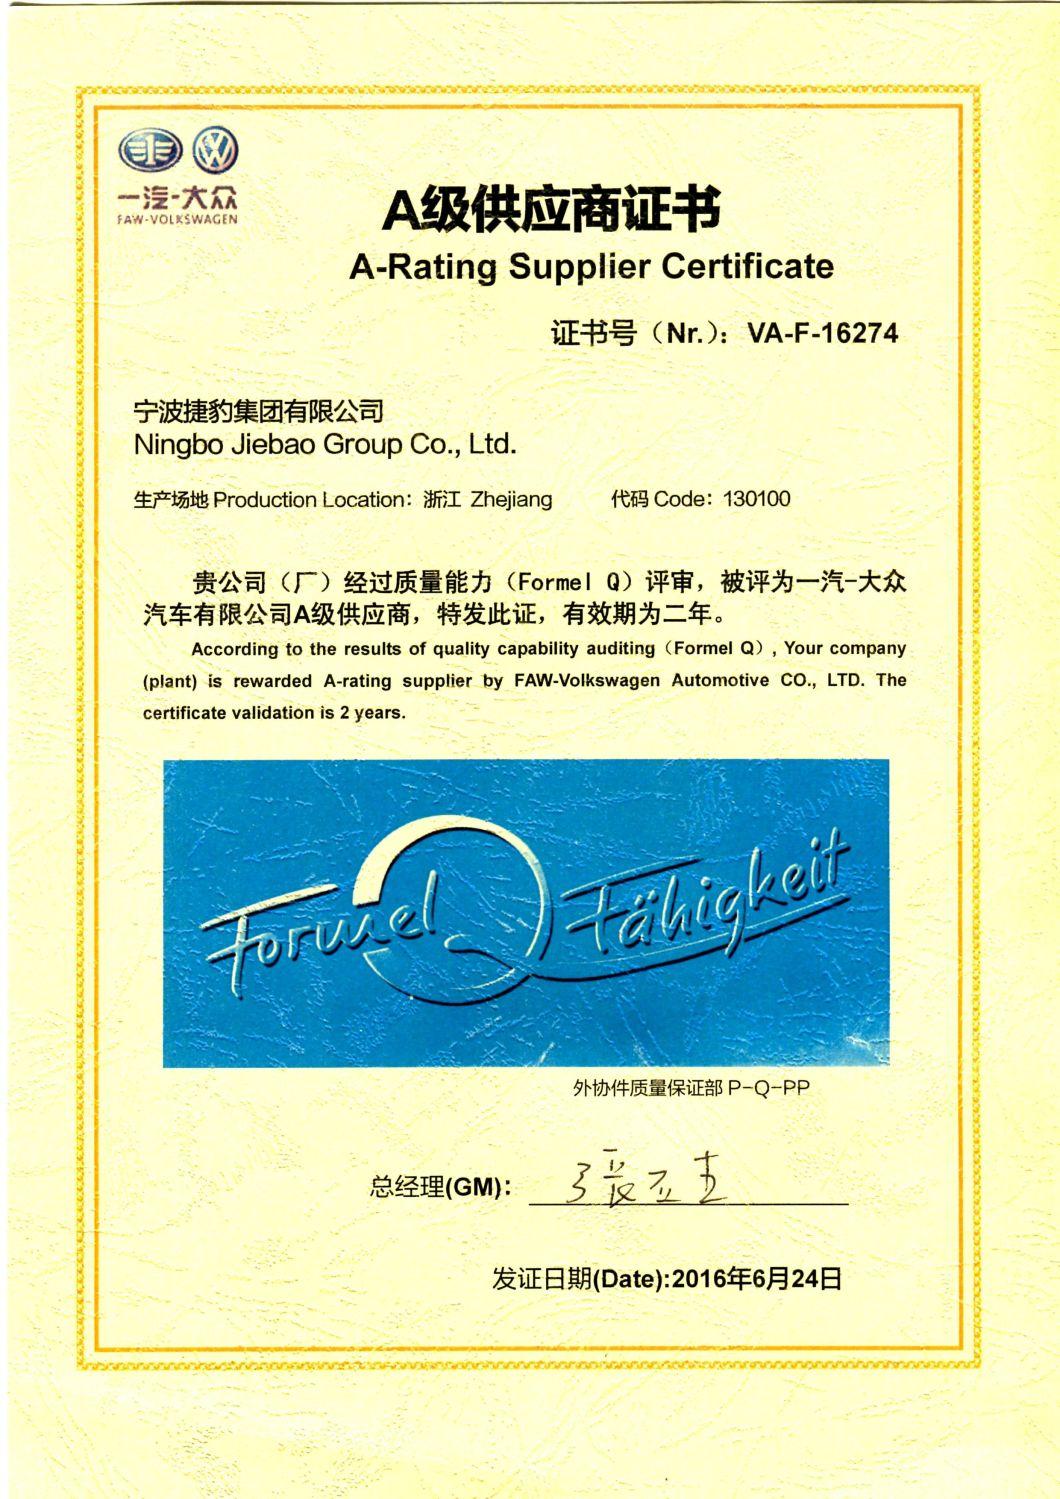 General Motors Belt Maker - Jiebao High Quality Neoprene Transmission Parts Fan Automotive Textile Garment Packaging Agricultural Machinery Toothed Belt